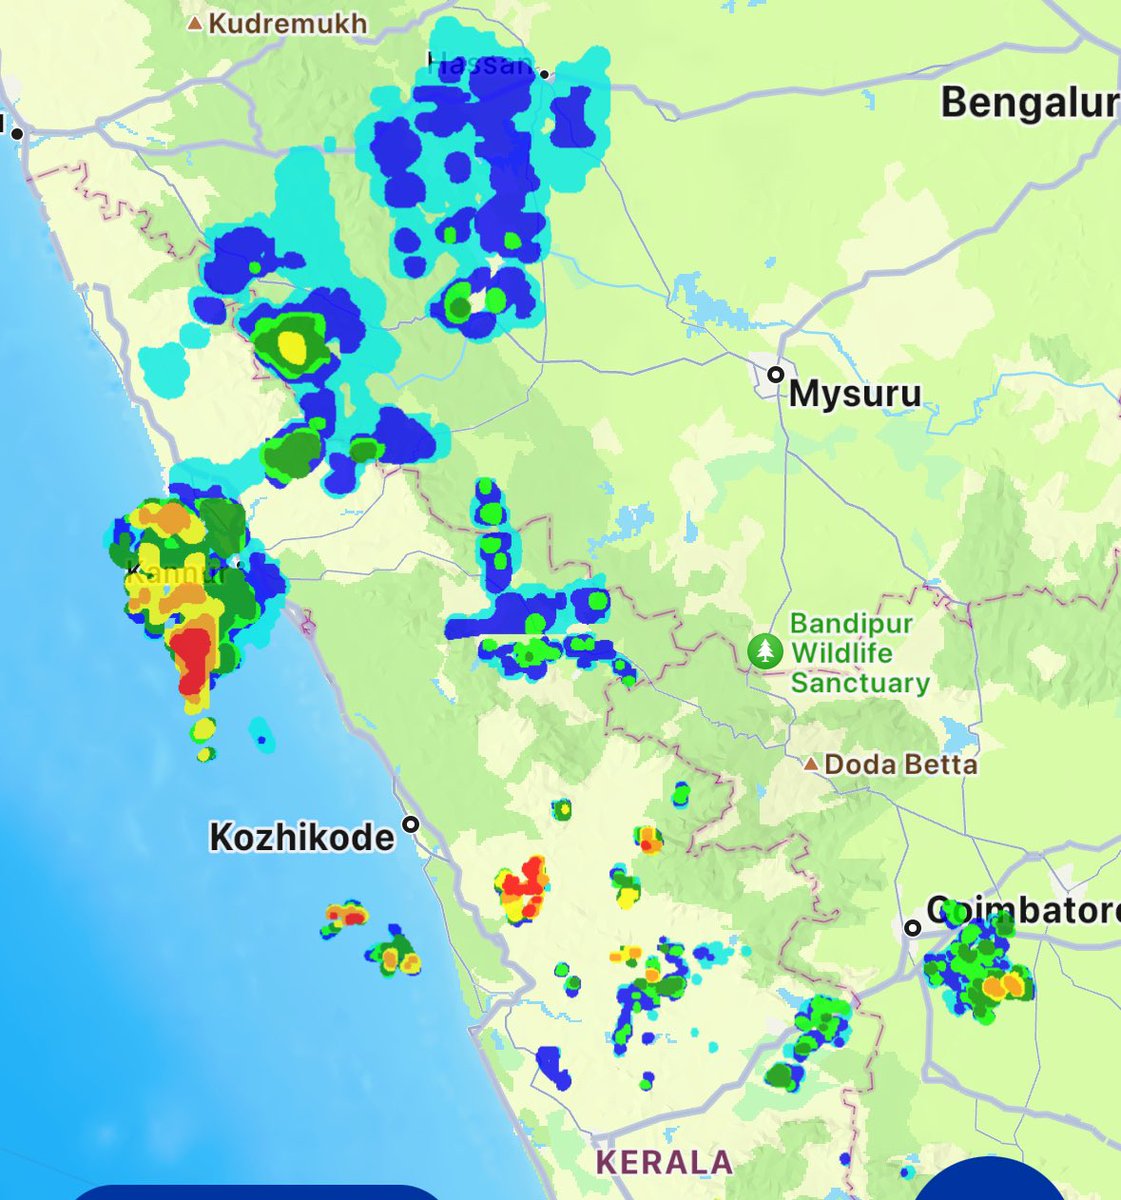 Alakode Payyavoor Kanhangad Thrikaripur Payyanur Malapuram Town Perinthalmanna Pattambi Palakkad & Kothamangalam will get Another Round Rains soon #kerala #keralarains